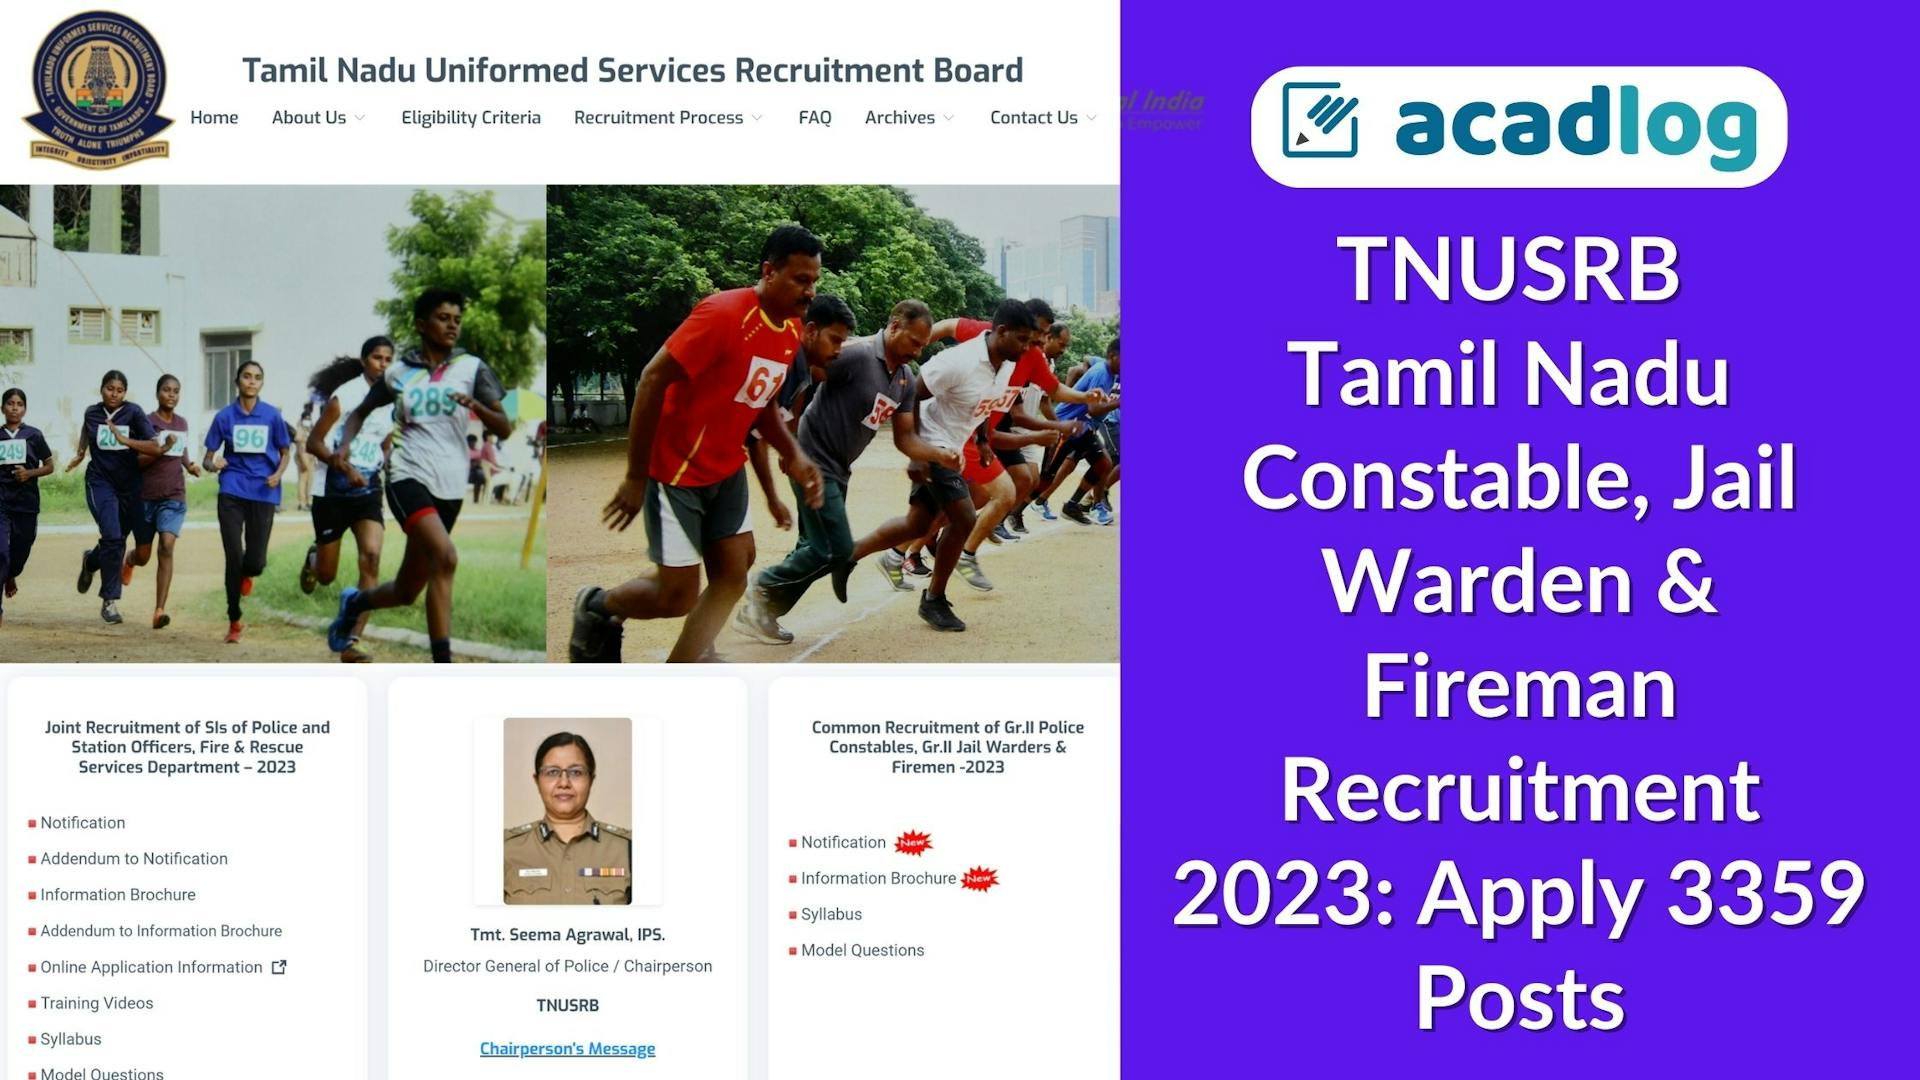 TNUSRB Tamil Nadu Constable, Jail Warden & Fireman Recruitment 2023: Apply 3359 Posts